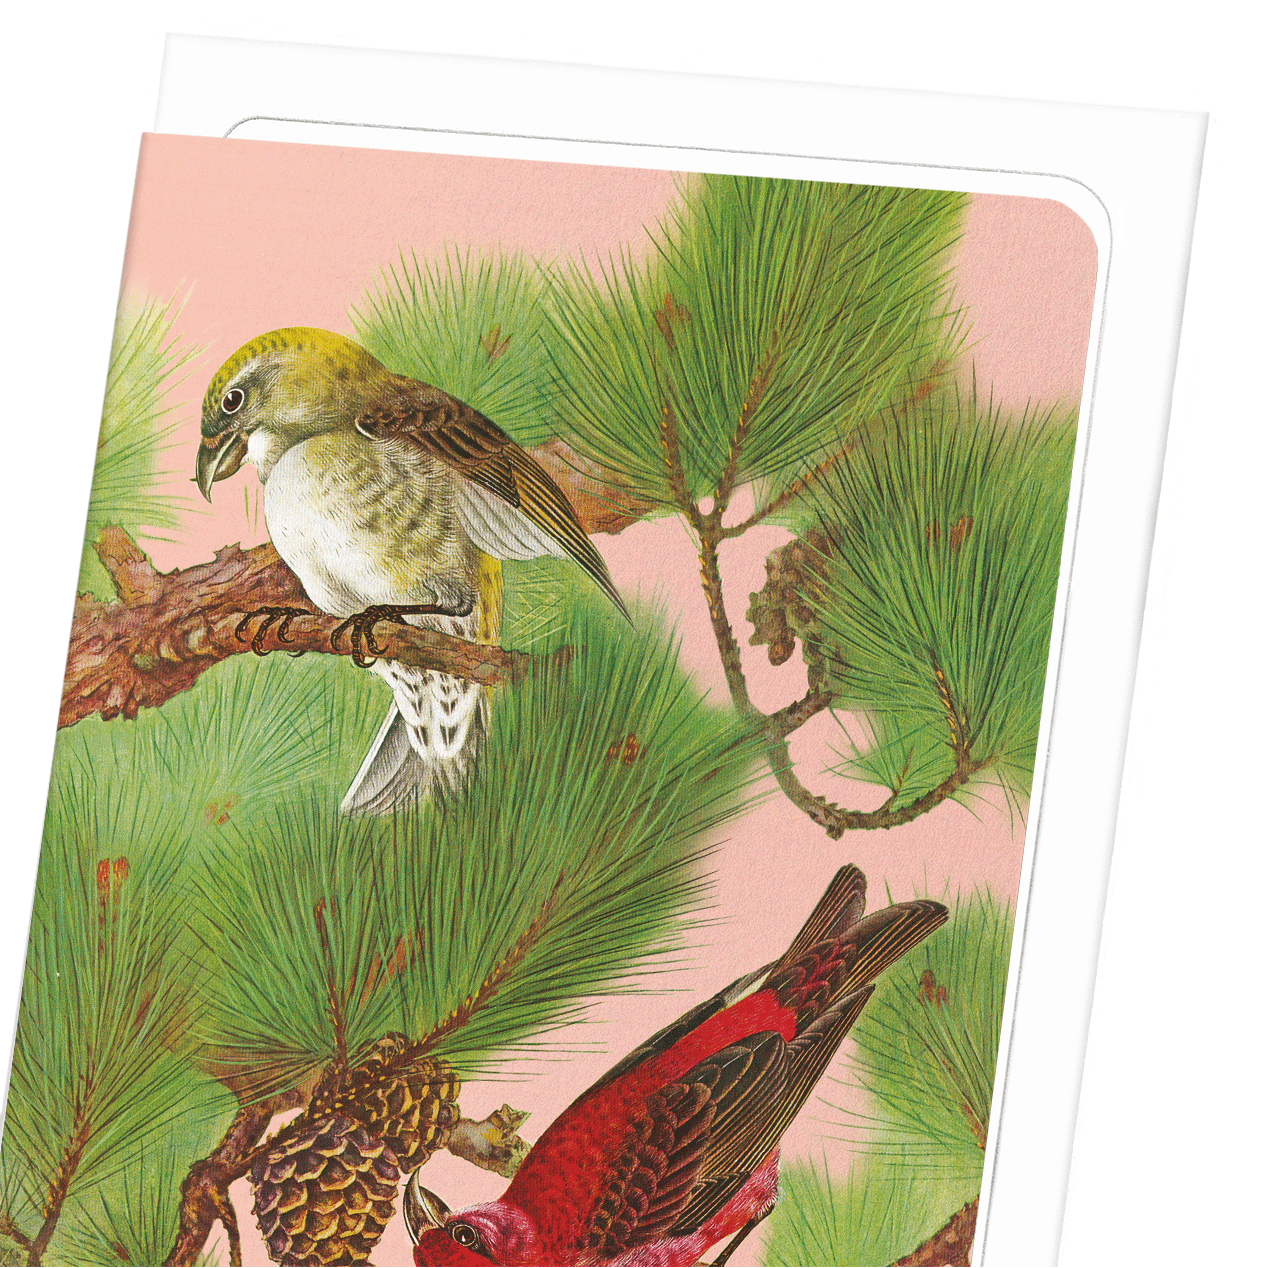 COMMON CROSSBILL BIRDS ON PINE TREE (C.1930)